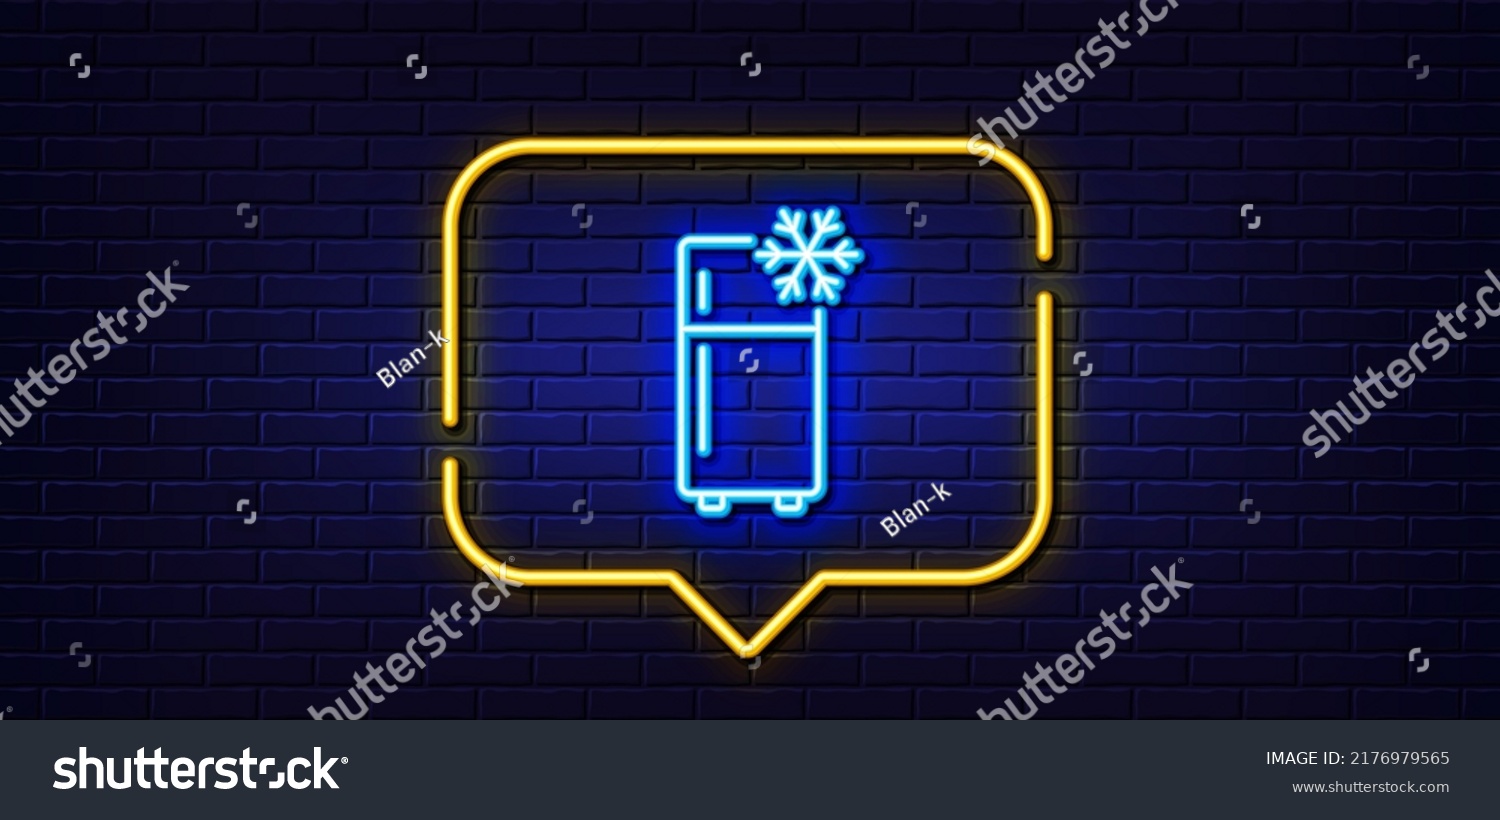 SVG of Neon light speech bubble. Single chamber refrigerator line icon. Fridge sign. Freezer storage symbol. Neon light background. Refrigerator glow line. Brick wall banner. Vector svg